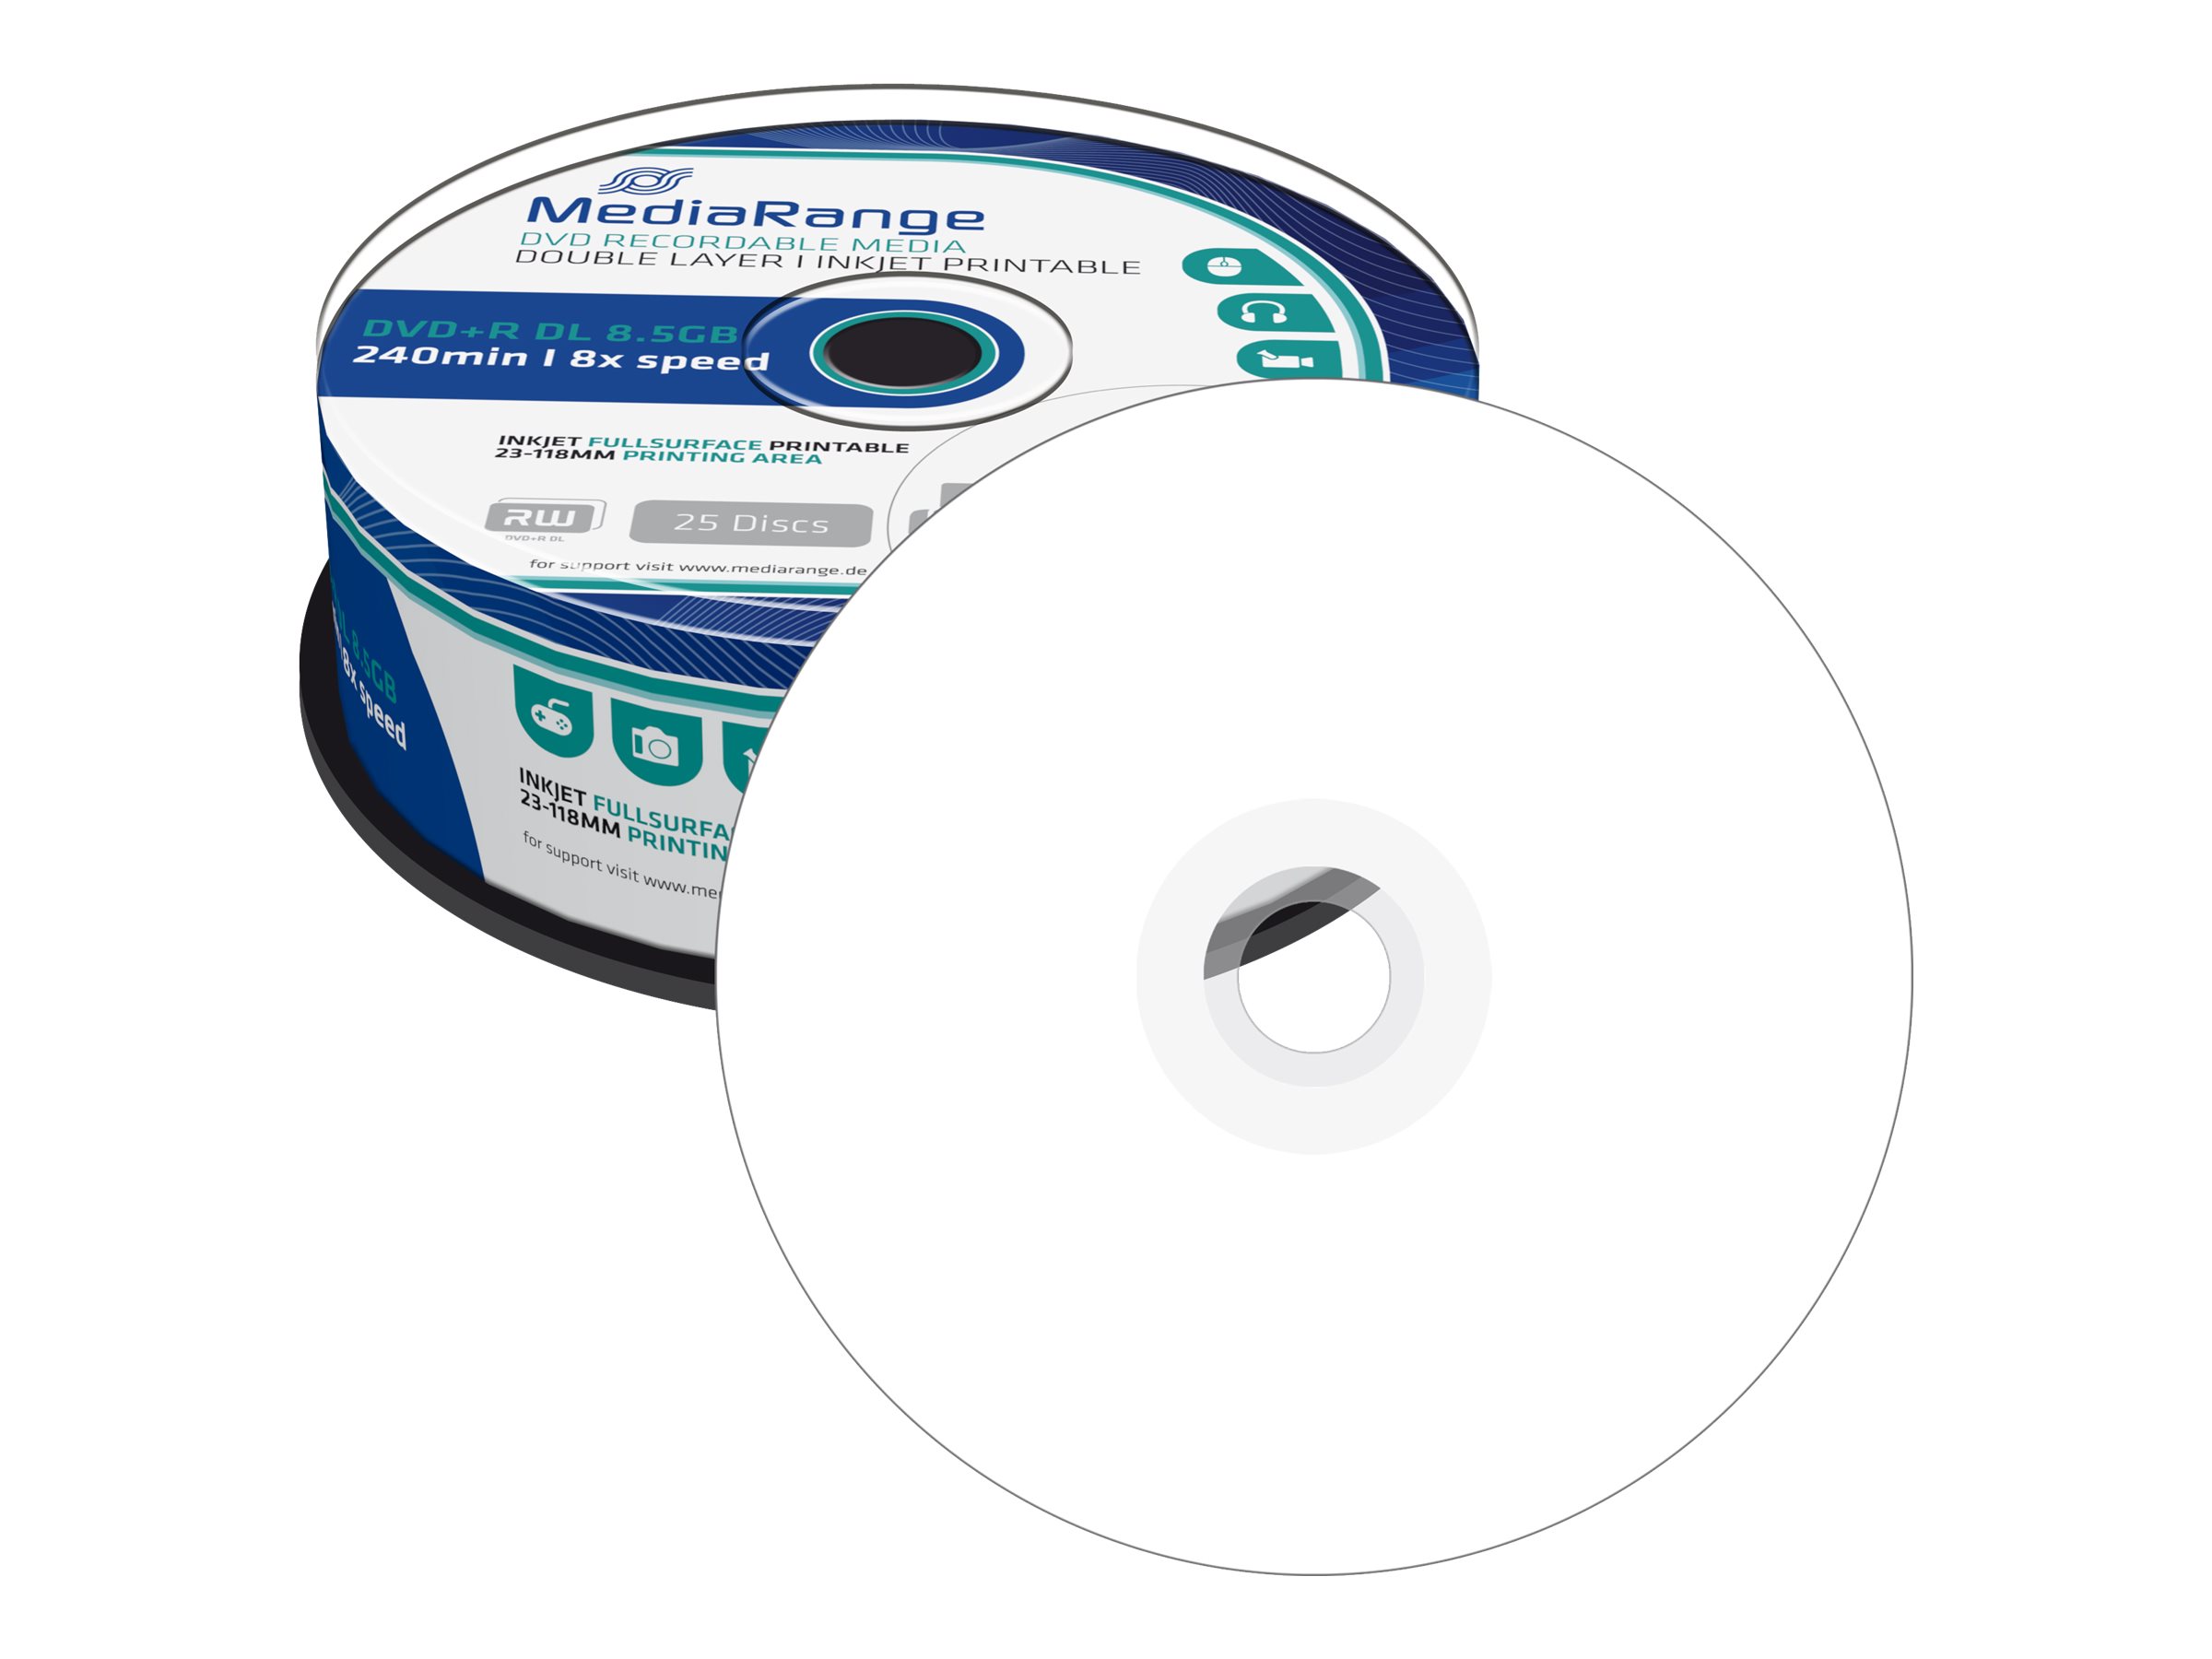 Verbatim Disques Vierges DVD+R DL 8.5GB 8X 50PK Inkjet Printable